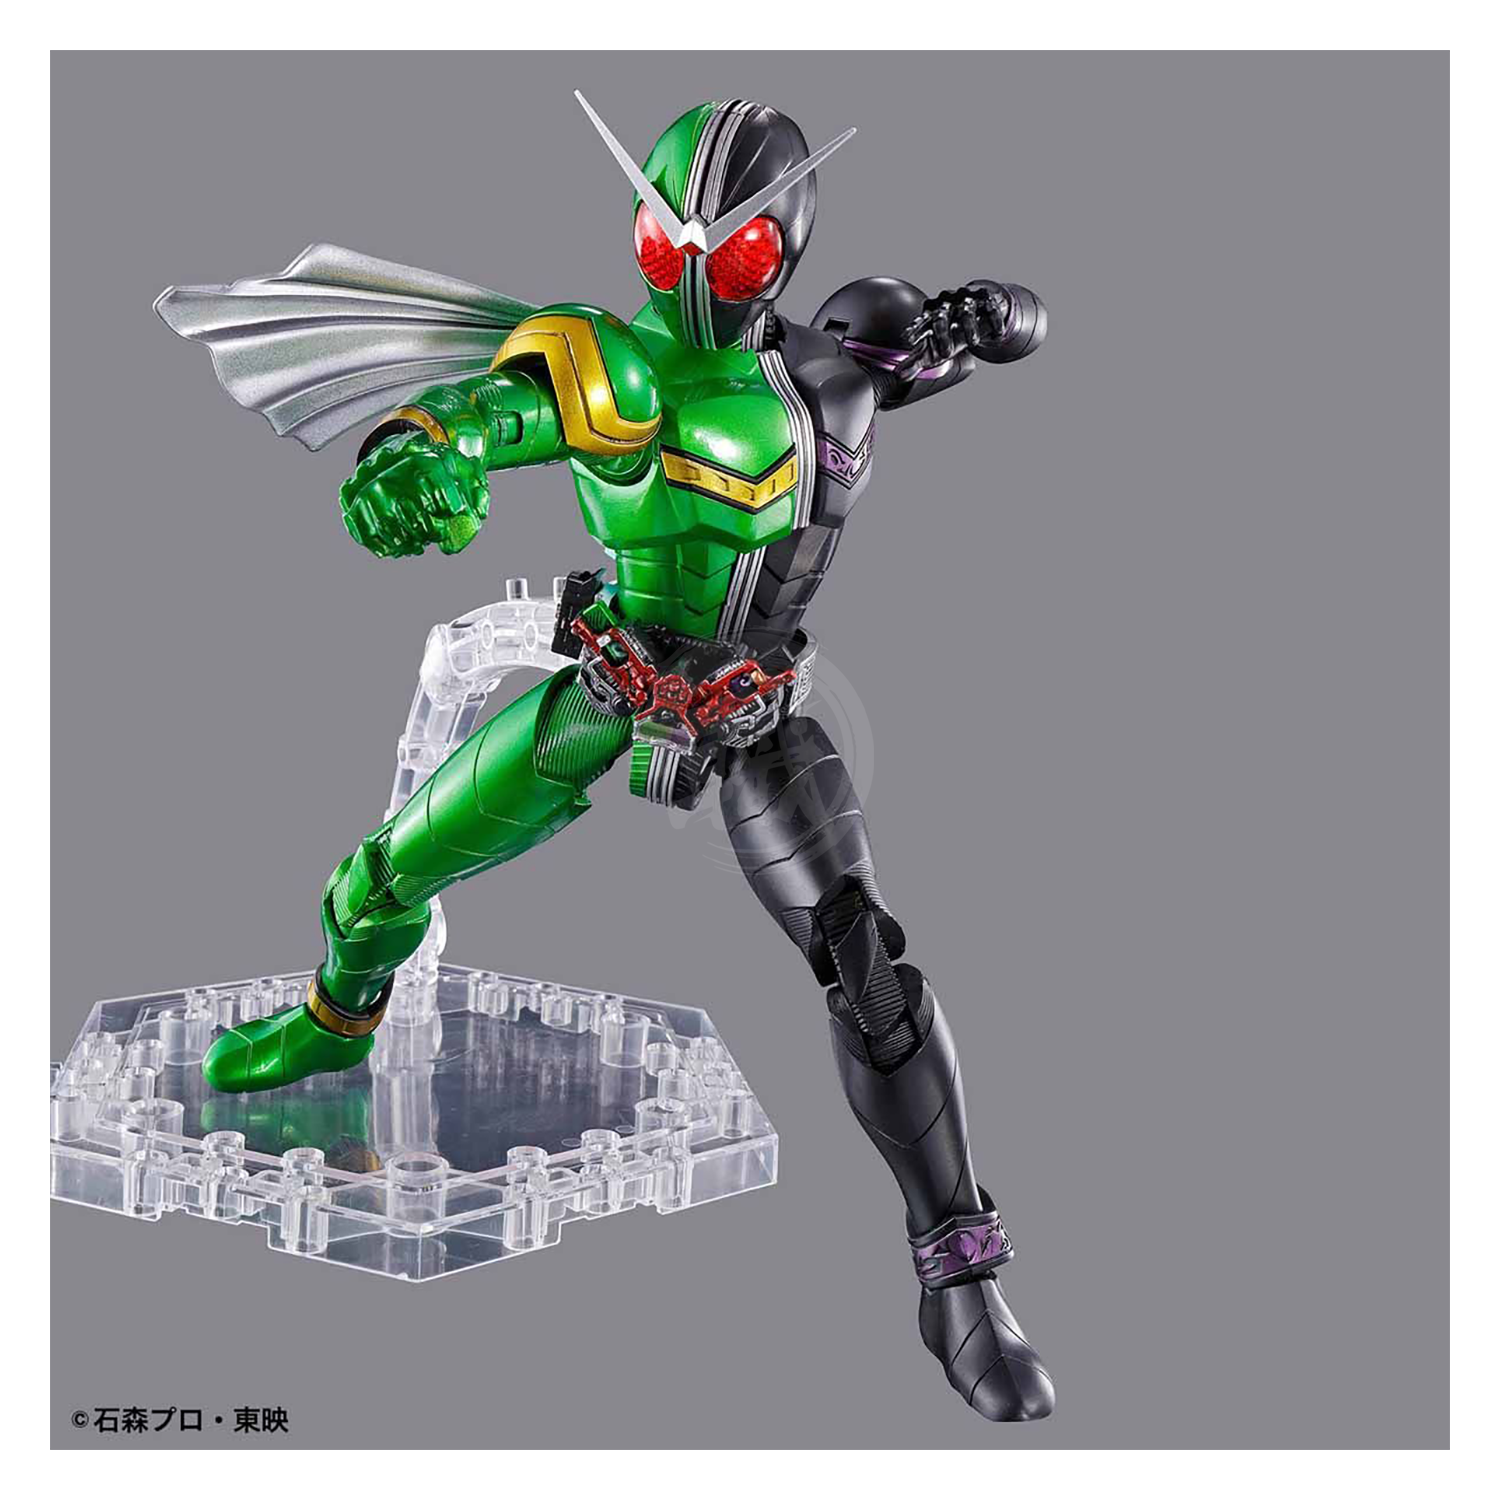 Bandai - Figure-Rise Standard Kamen Rider Double Cyclone Joker - ShokuninGunpla